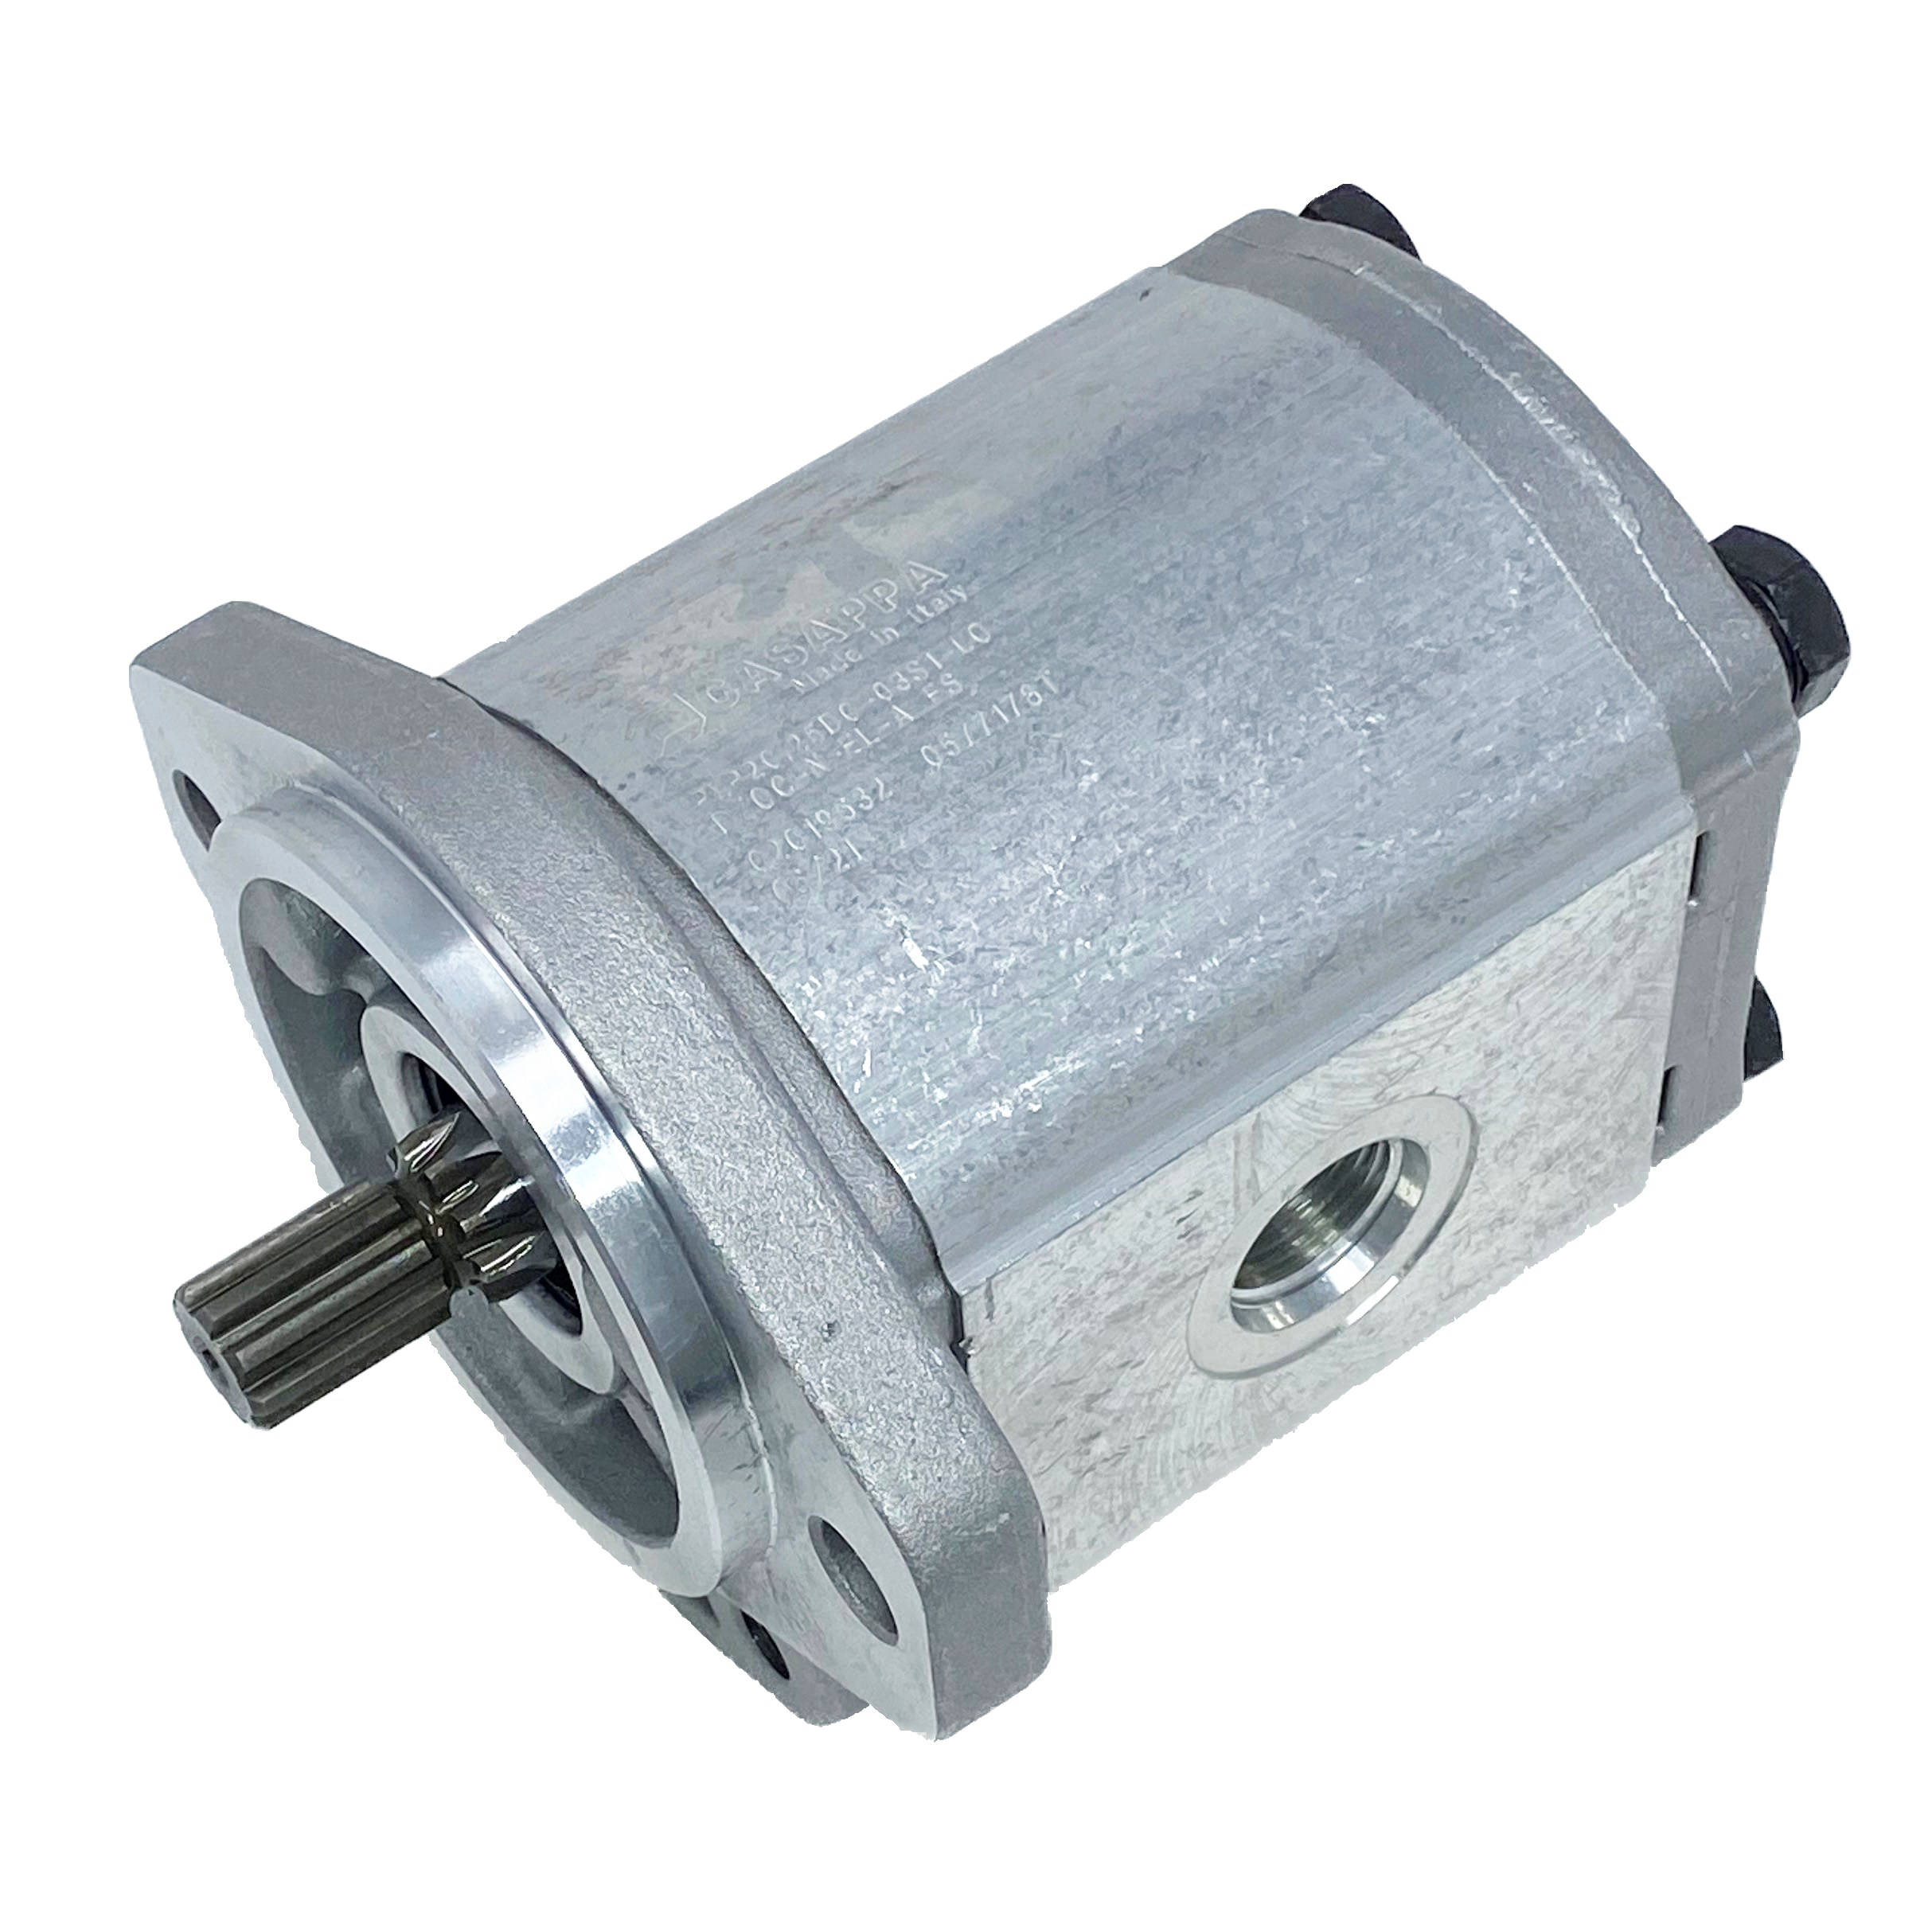 PLM20.25B0-07S1-LOC/OD-N-EL : Casappa Polaris Gear Motor, 26.42cc, 2465psi Rated, 3045RPM, Reversible Interior Drain, 11T 16/32dp Shaft, SAE A 2-Bolt Flange, 0.625 (5/8") #10 SAE Inlet, 0.75 (3/4") #12 SAE Outlet, Aluminum Body & Flange